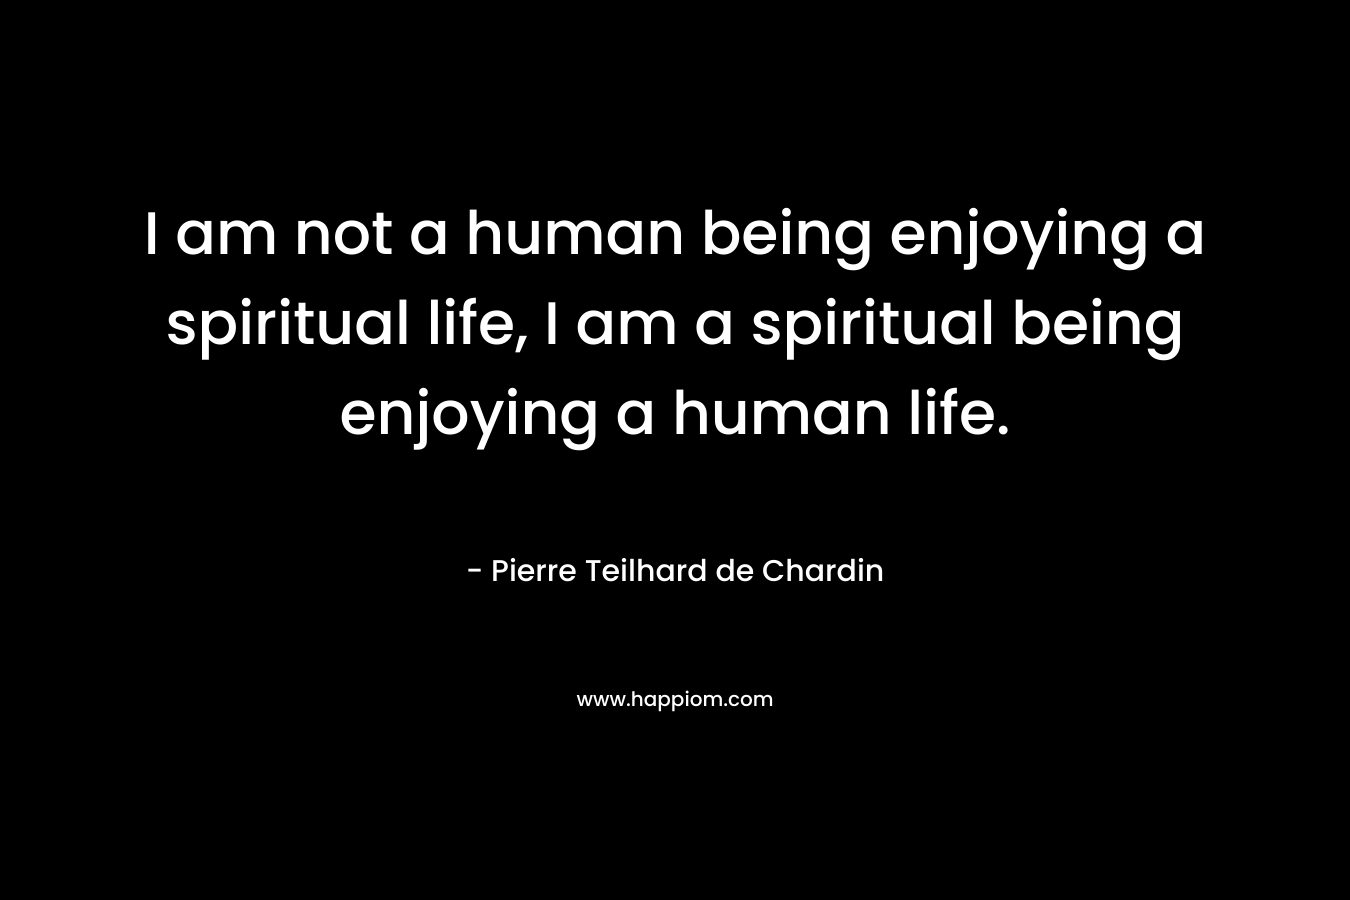 I am not a human being enjoying a spiritual life, I am a spiritual being enjoying a human life.